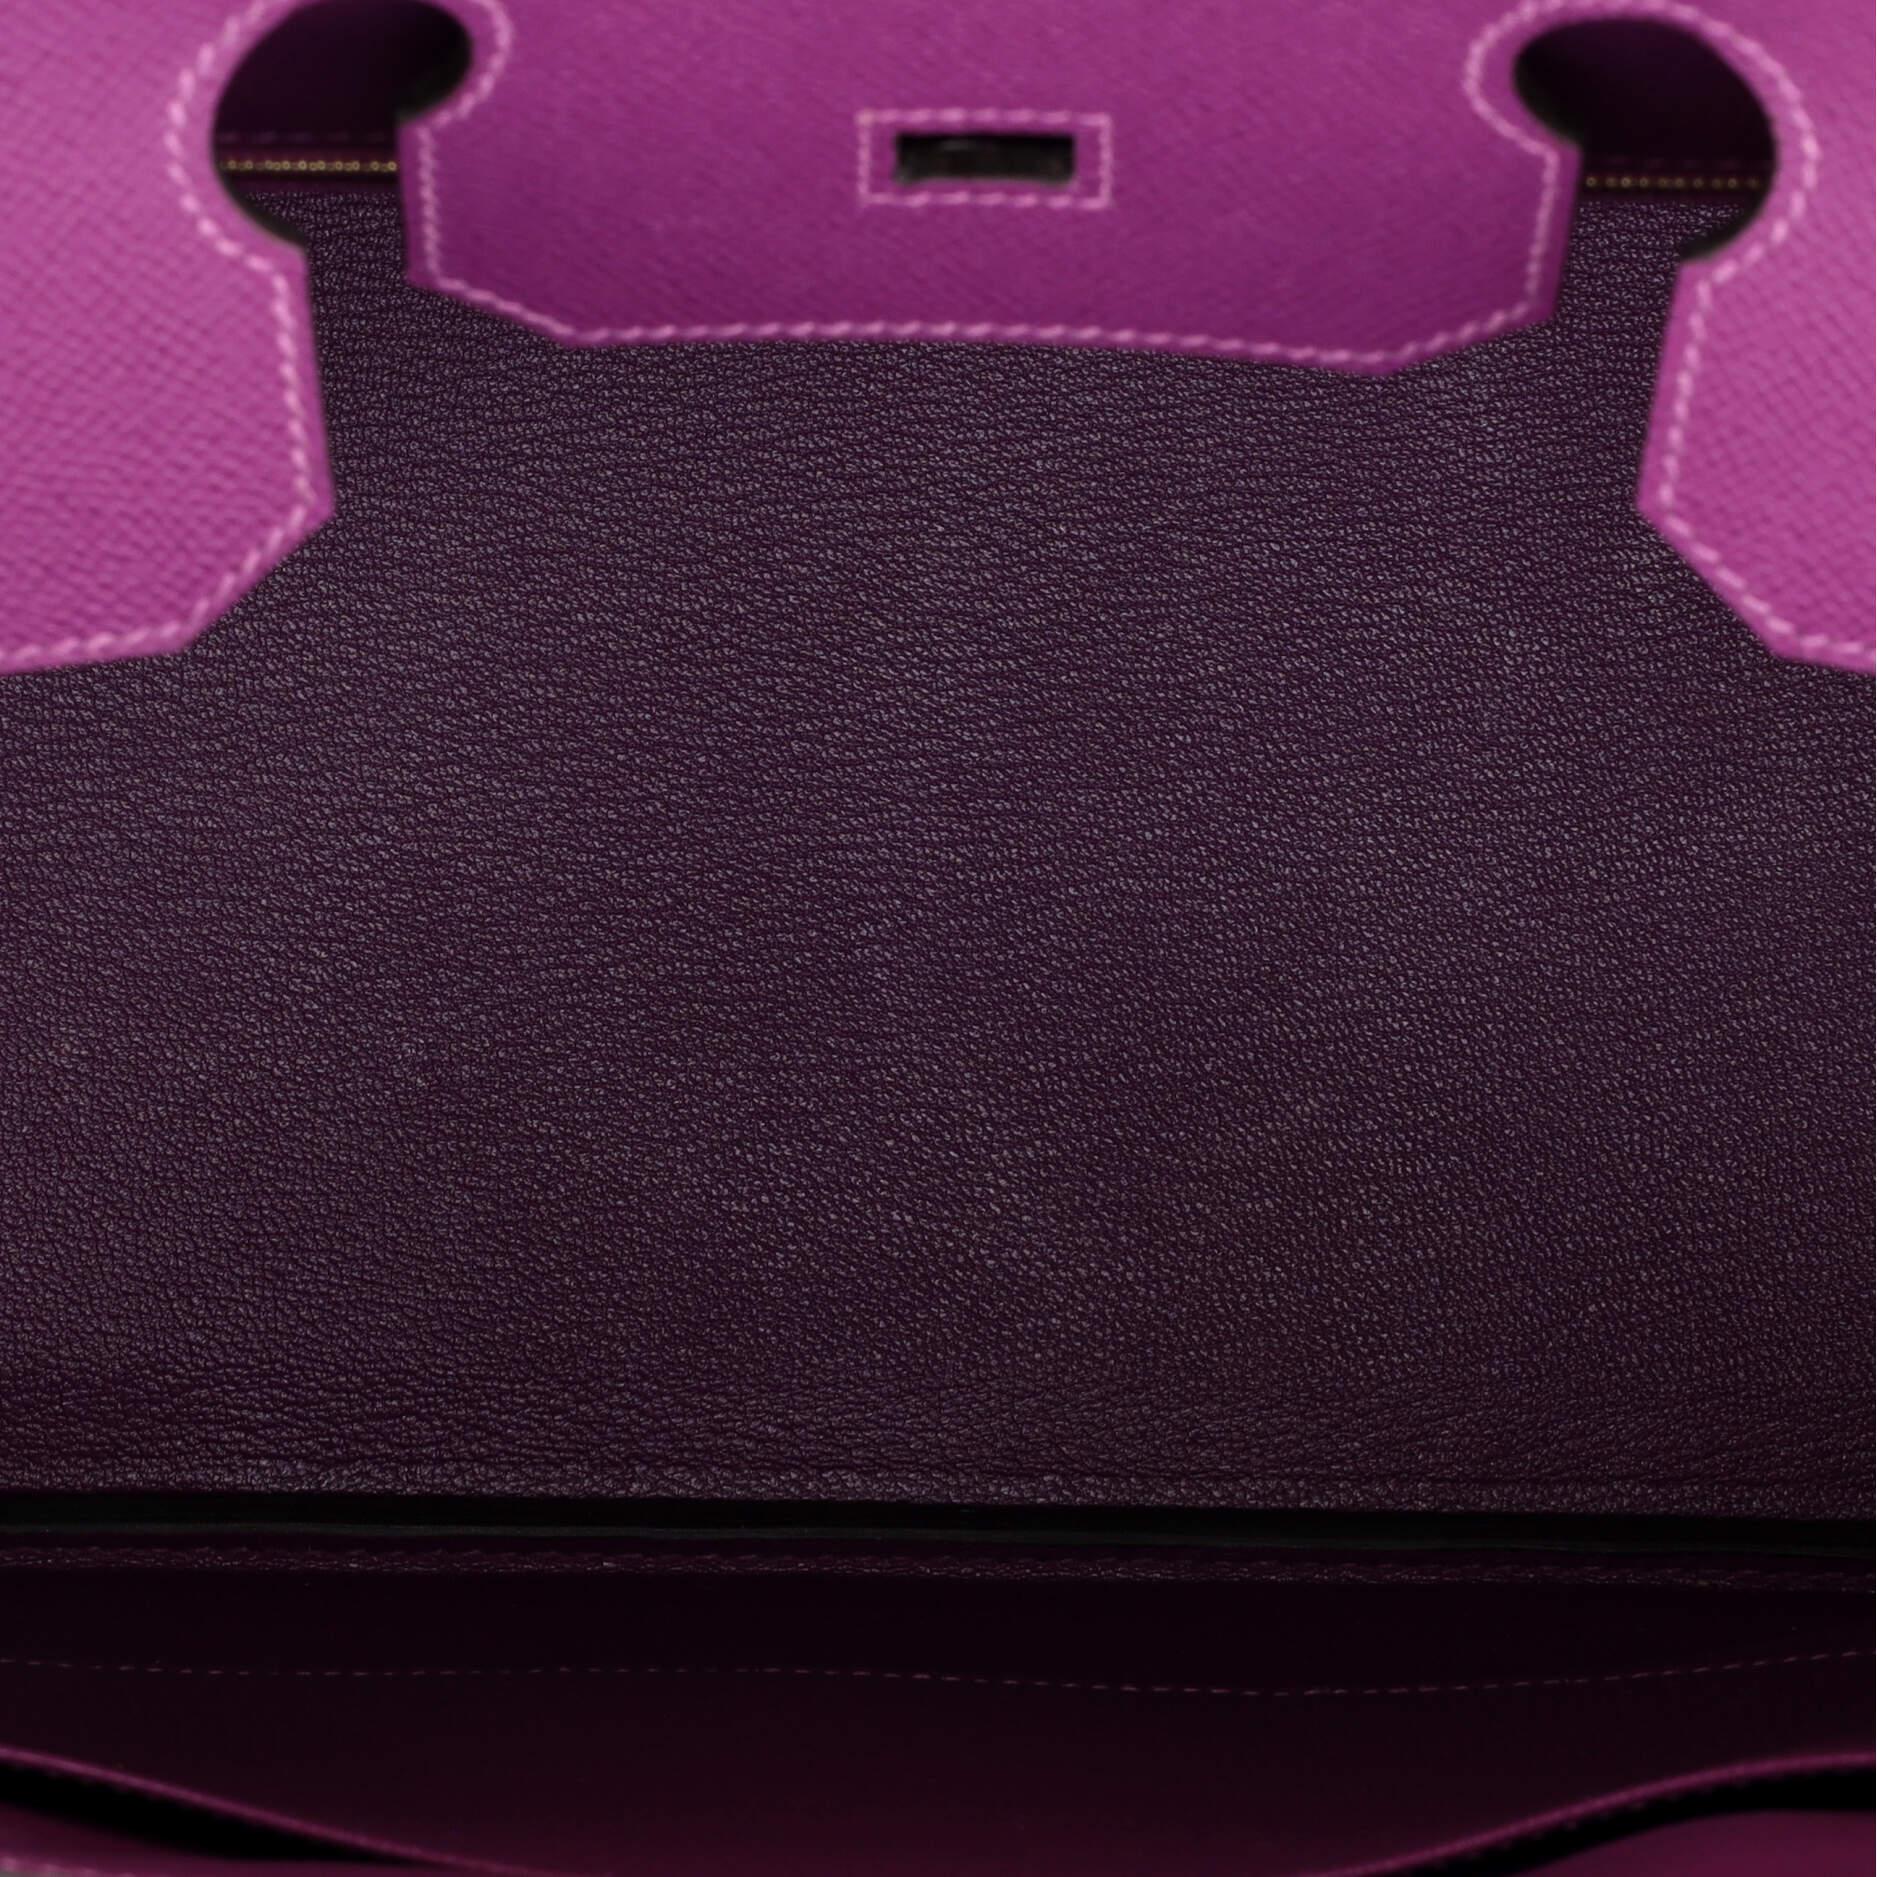 Hermes Birkin Handbag Anemone Epsom with Gold Hardware 35 2